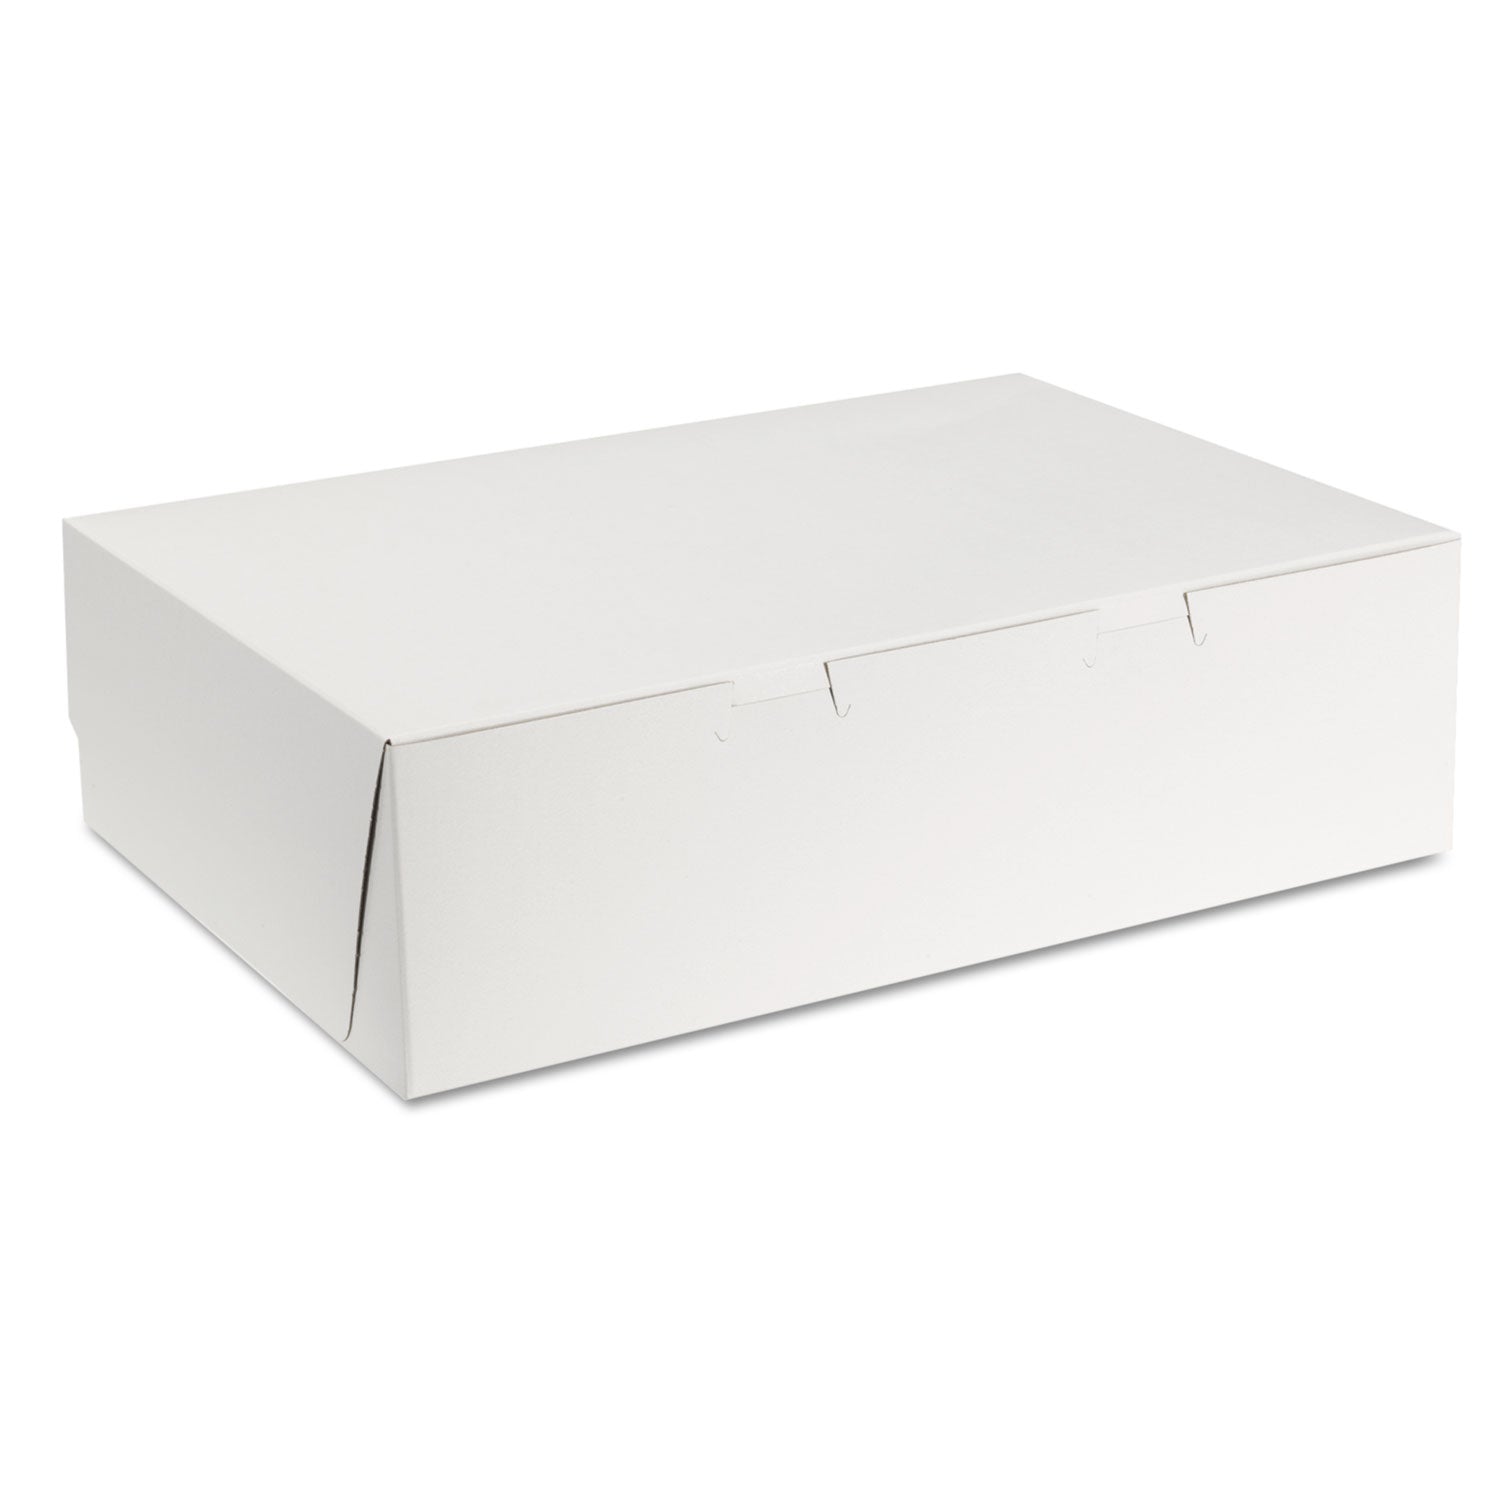 white-one-piece-non-window-bakery-boxes-1-4-sheet-cake-box-14-x-10-x-4-white-paper-100-carton_sch1025 - 1